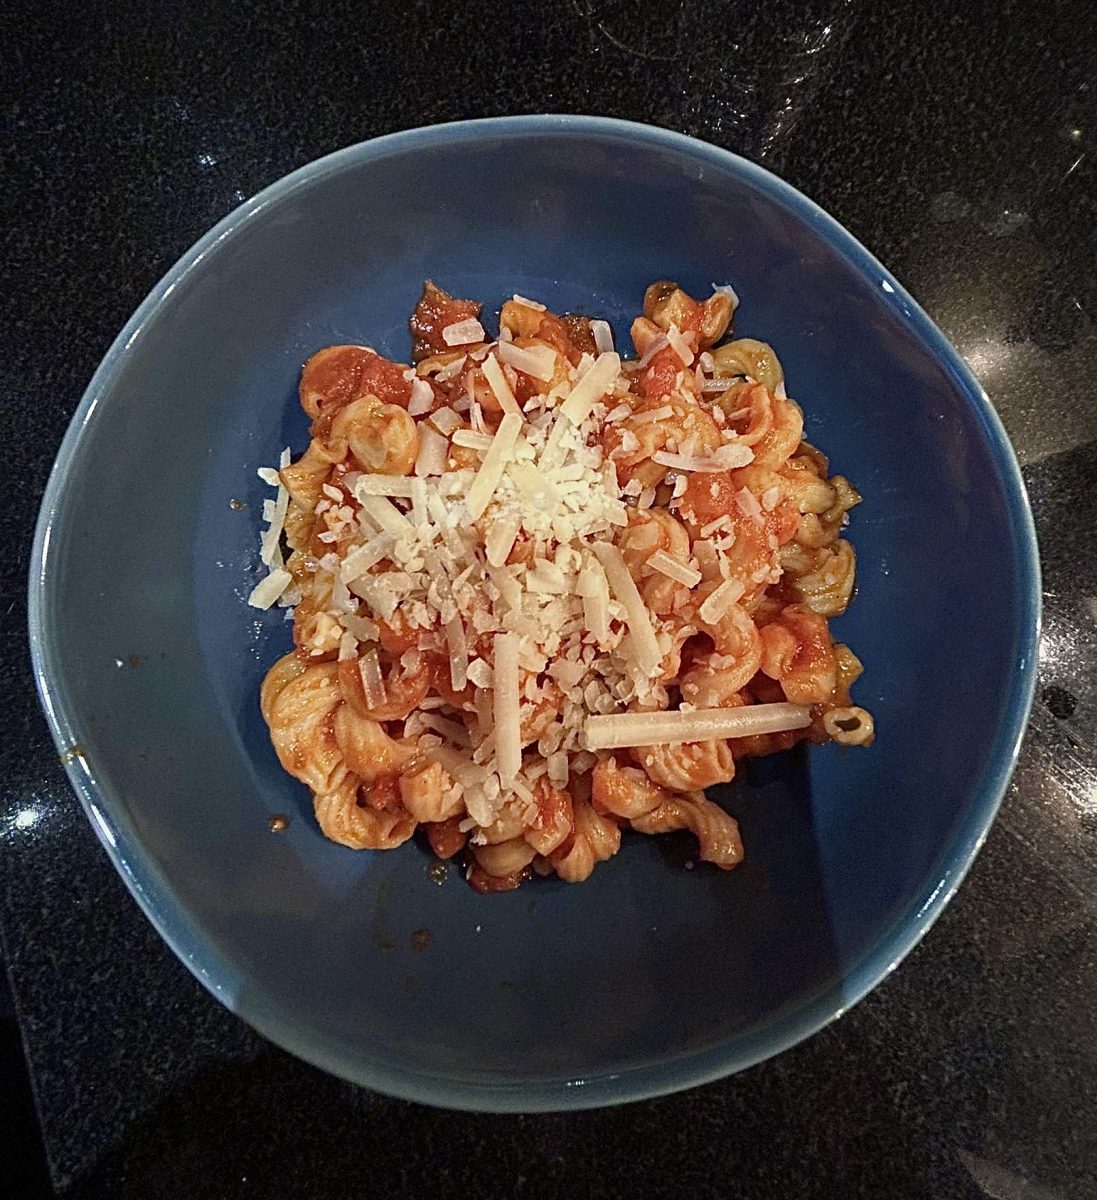 Homemade pasta with extra marinara and extra parmesan cheese